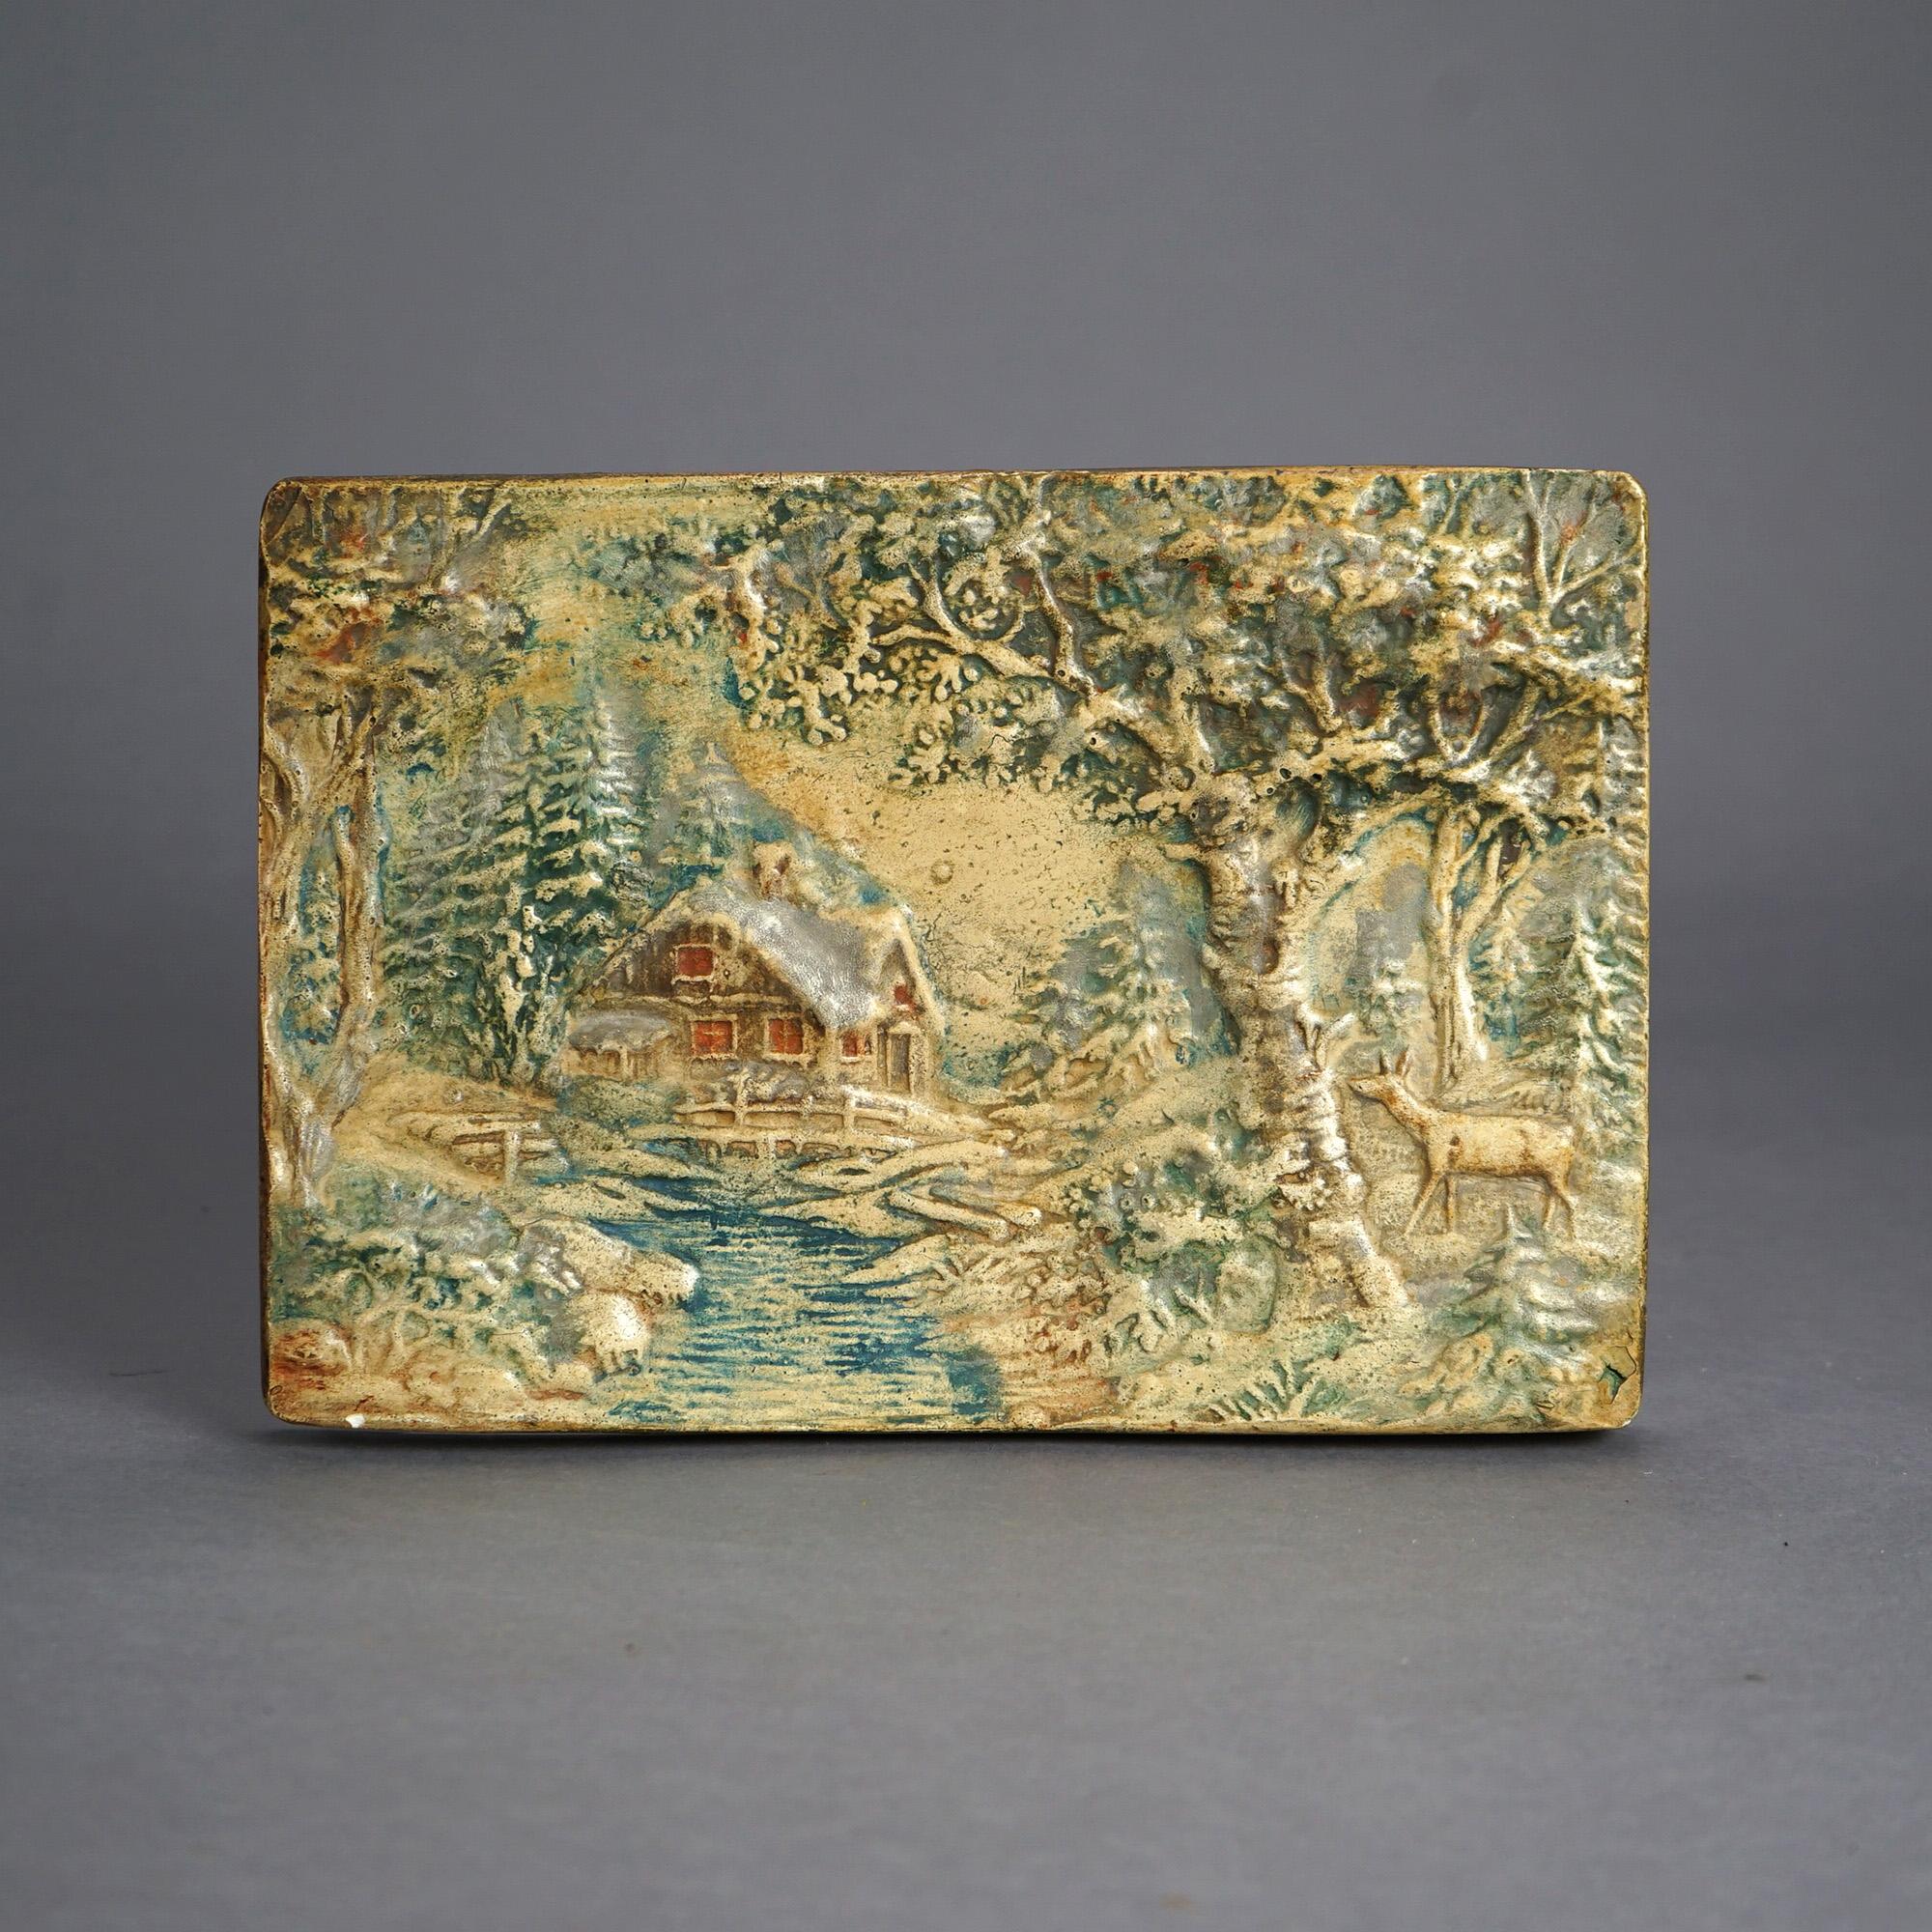 Antique Arts & Crafts attr. Weller Embossed Woodland Landscape Pottery Plaque with Deer & Cabin, unsigned, C1920

Measures - 8